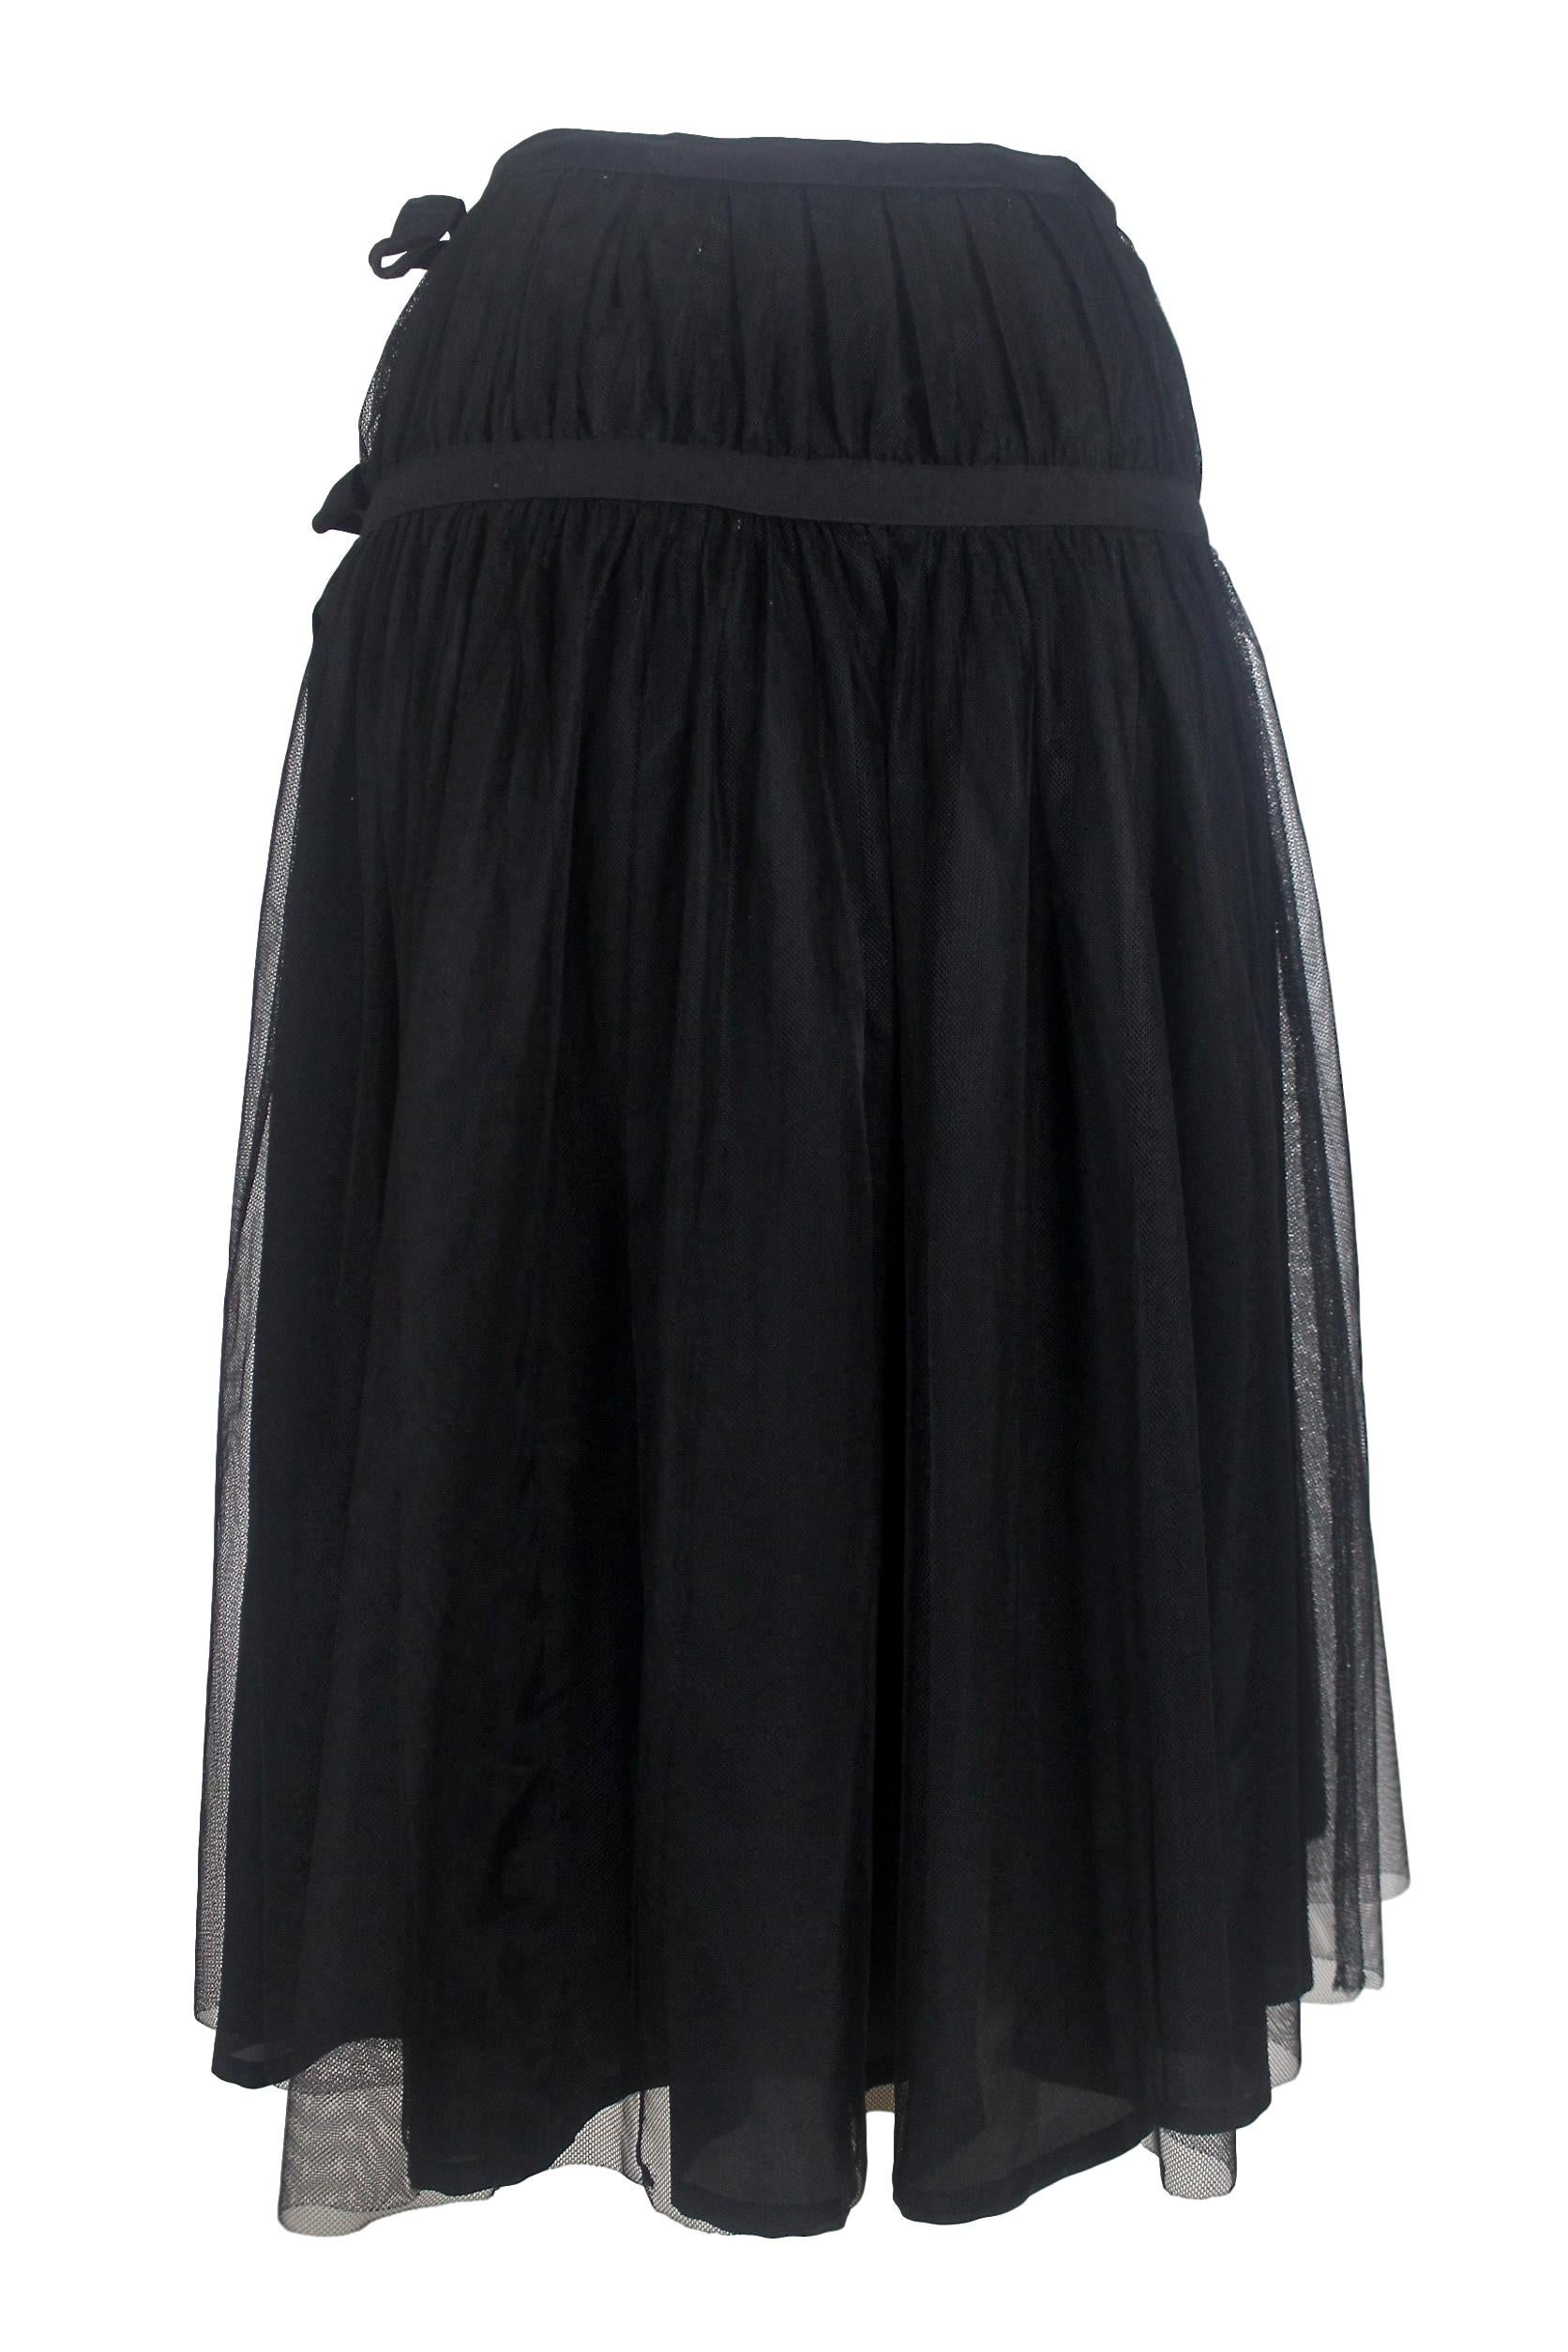 Comme des Garcons Tricot Double Layer Wrap Skirt 2007 For Sale 4